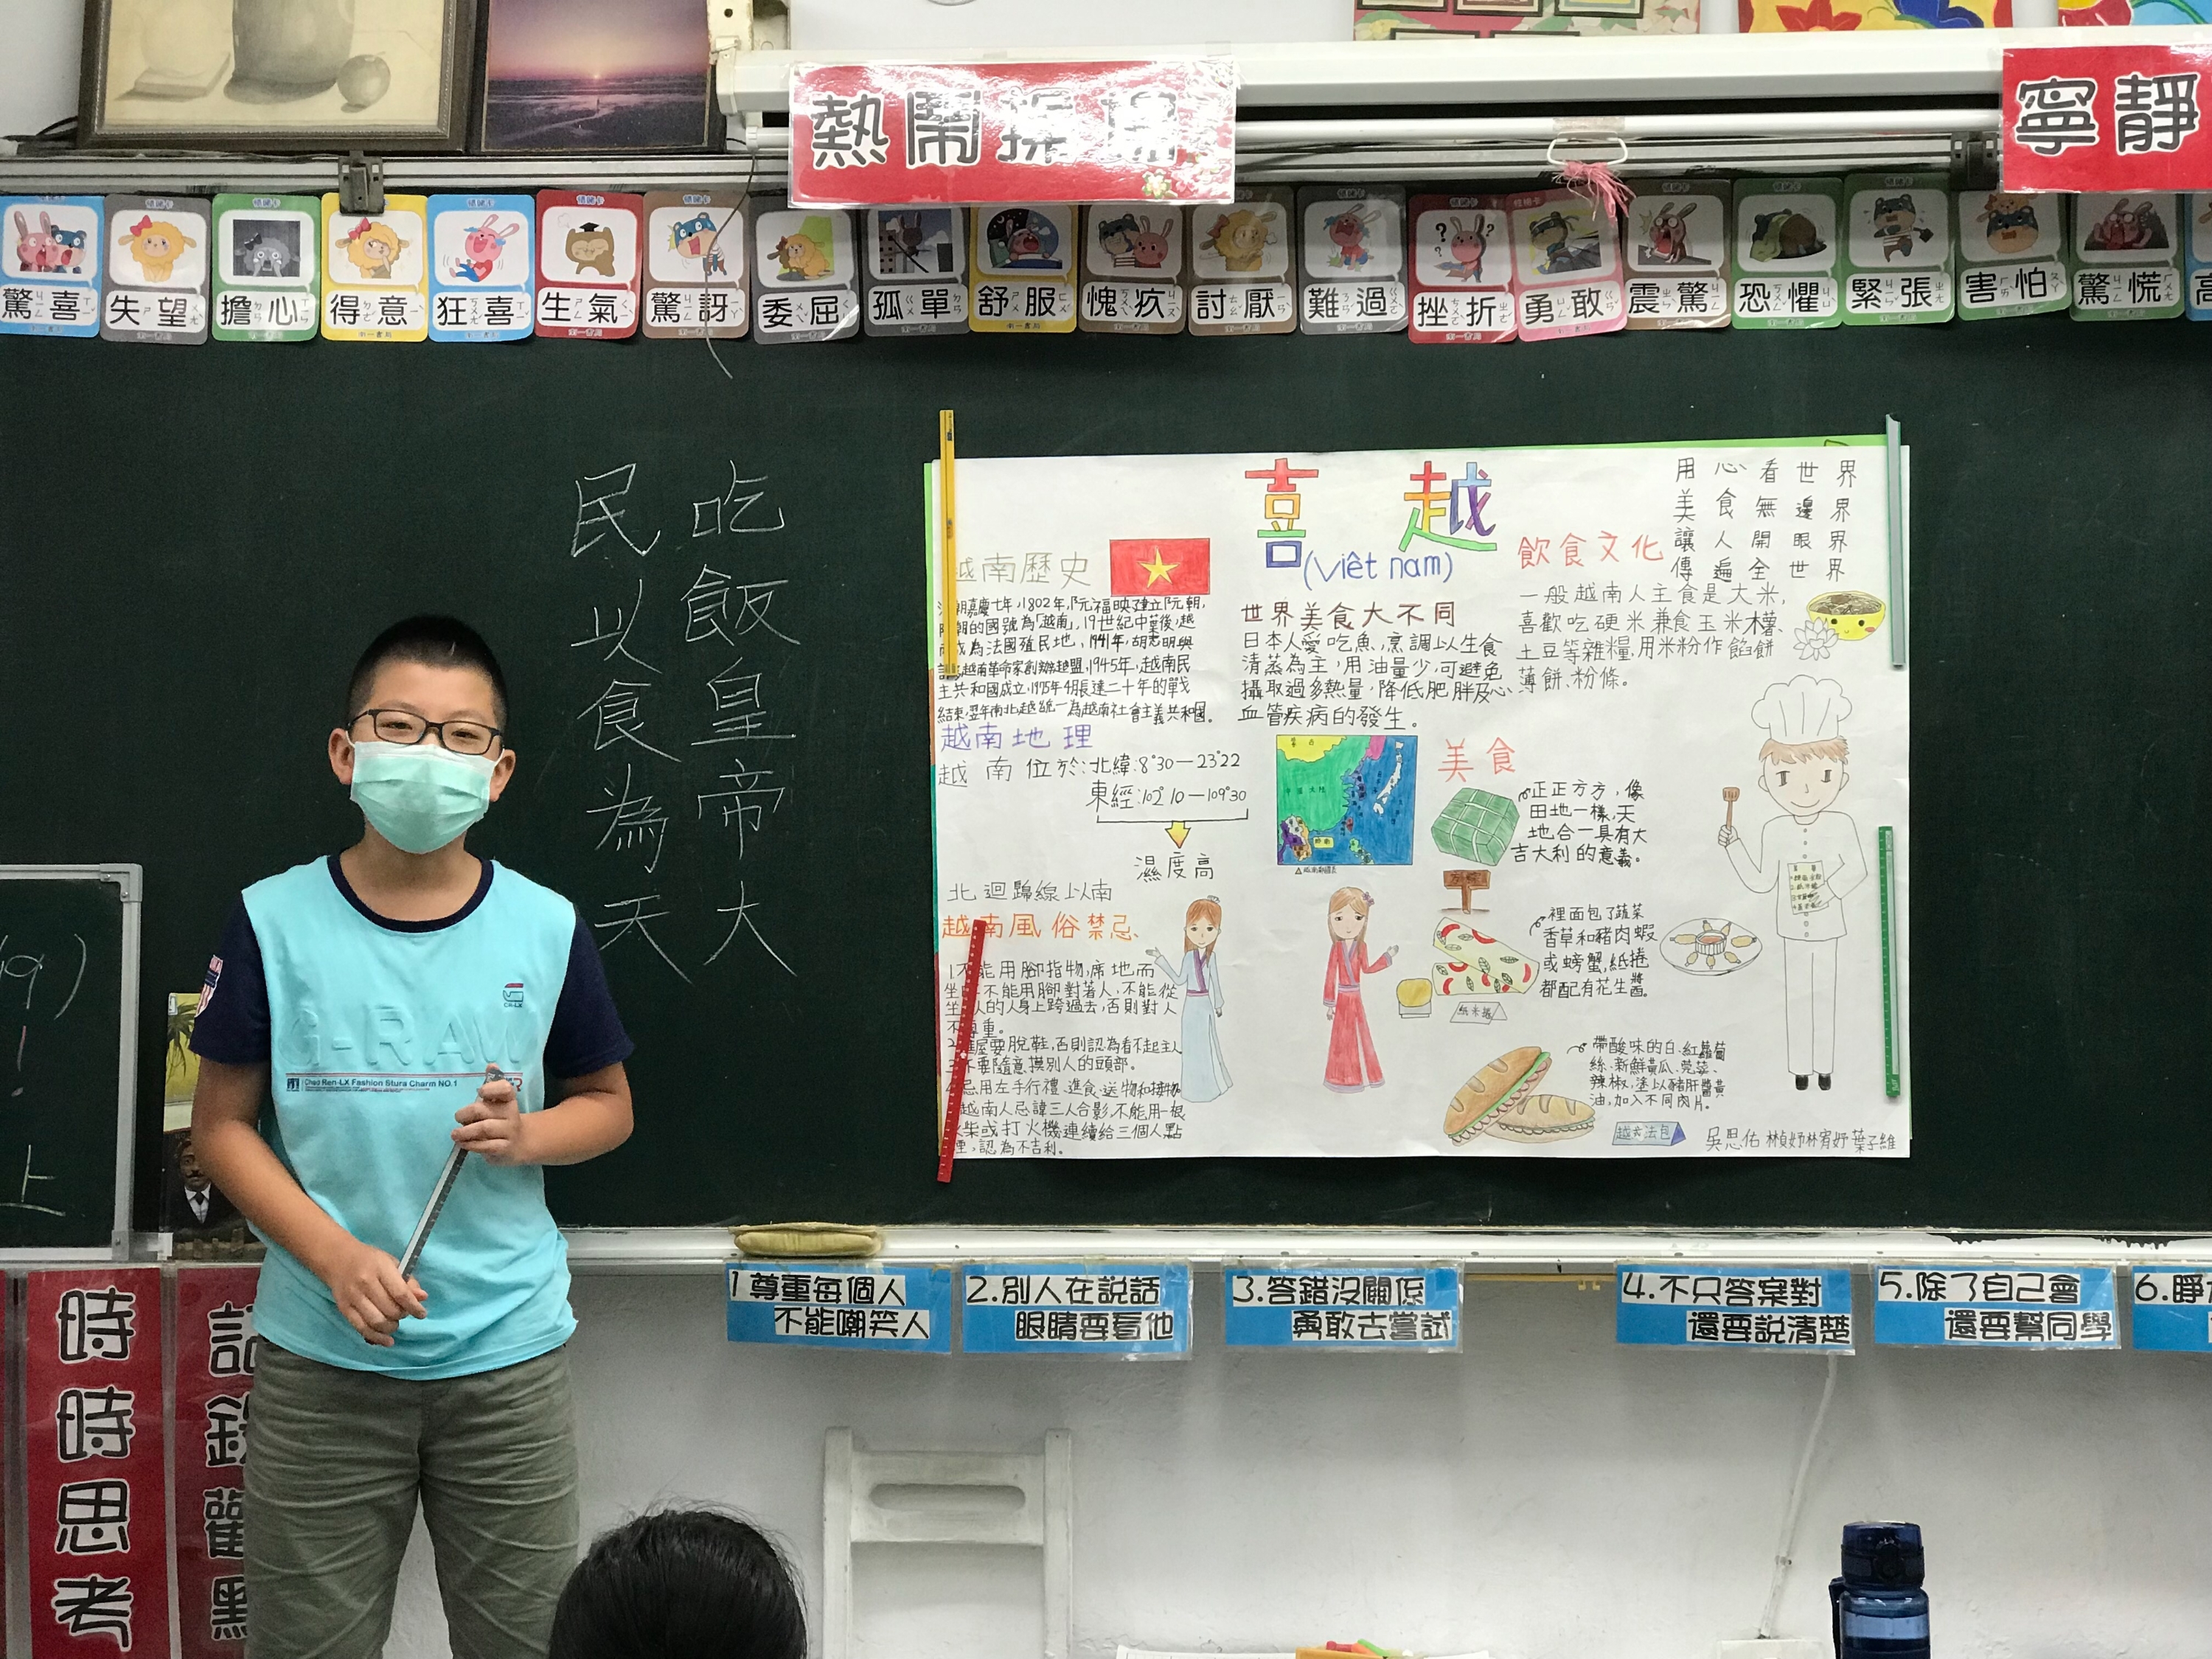 Kota Taipei baru mempromosikan kursus pendidikan makanan internasional untuk mendorong anak-anak naik ke panggung untuk berbagi budaya makanan di berbagai tempat, dan kemudian untuk memahami dunia dan merangkul budaya asing. (Sumber foto: Biro Pendidikan Kota Taipei Baru)